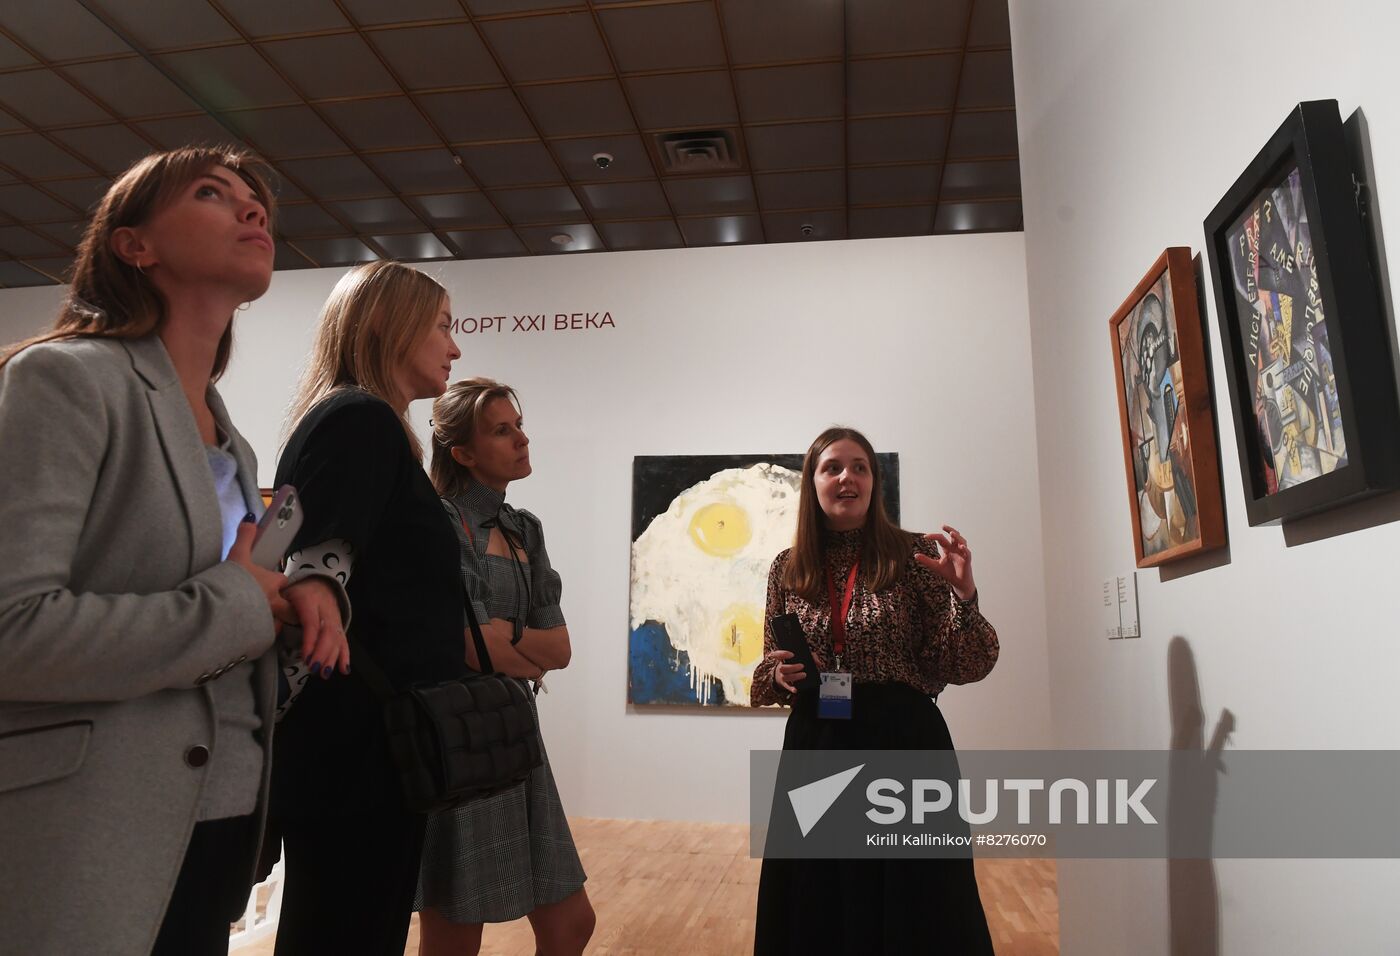 My Tretyakovka: From Virtual to Real exhibition at New Tretyakov Gallery